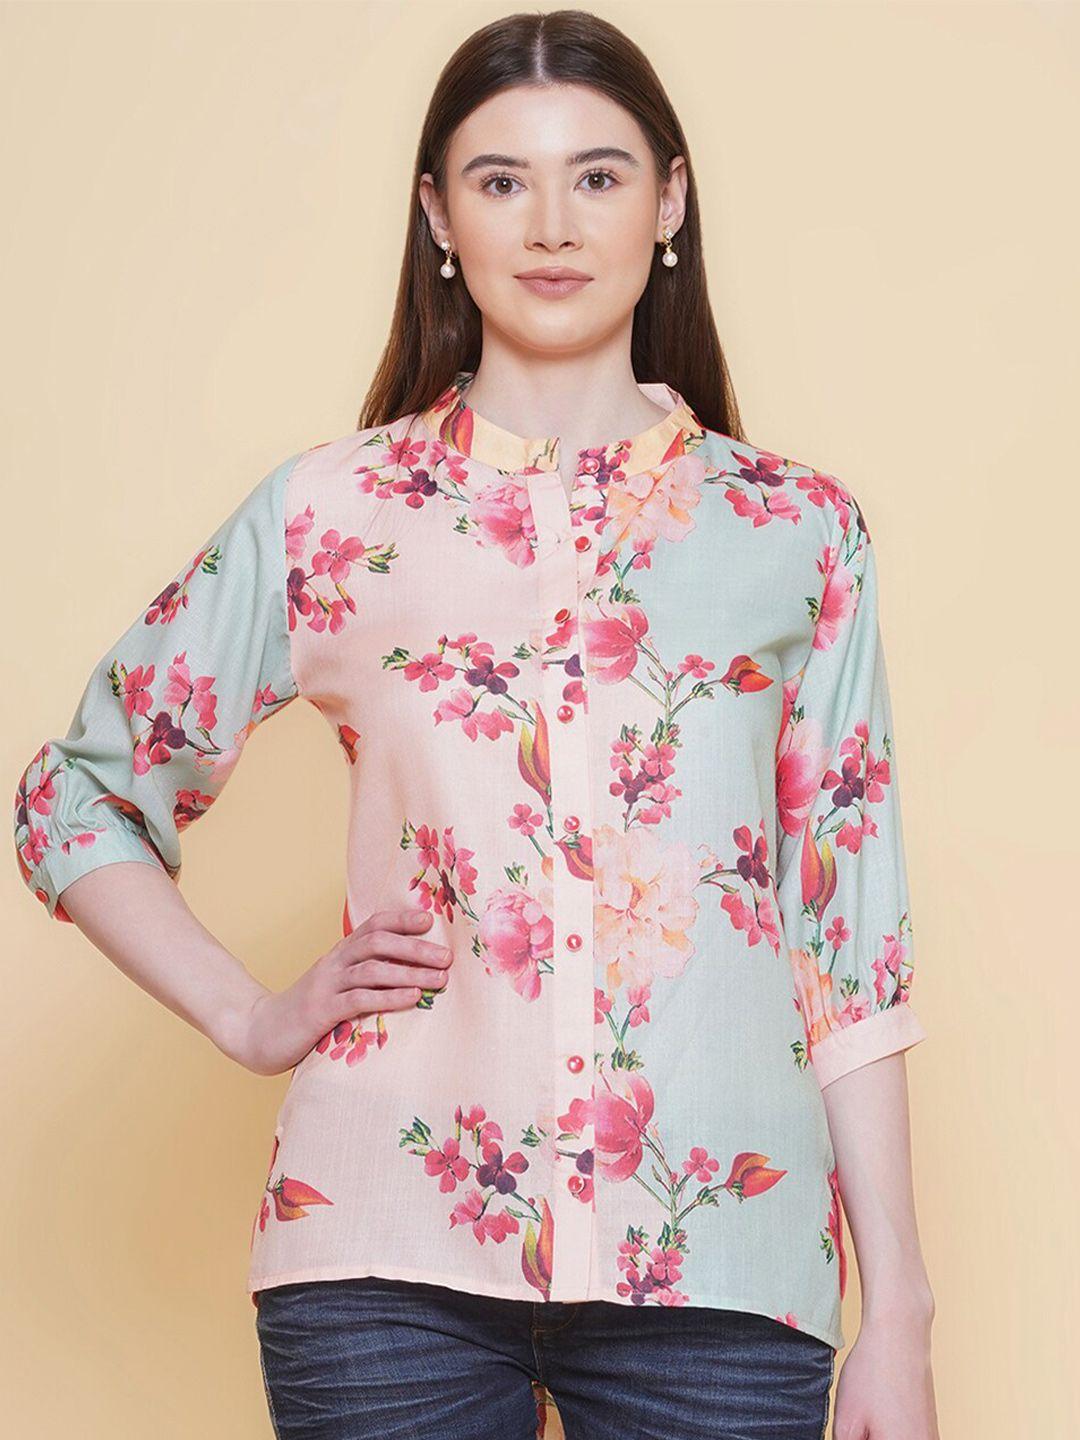 modish couture peach-coloured floral print top